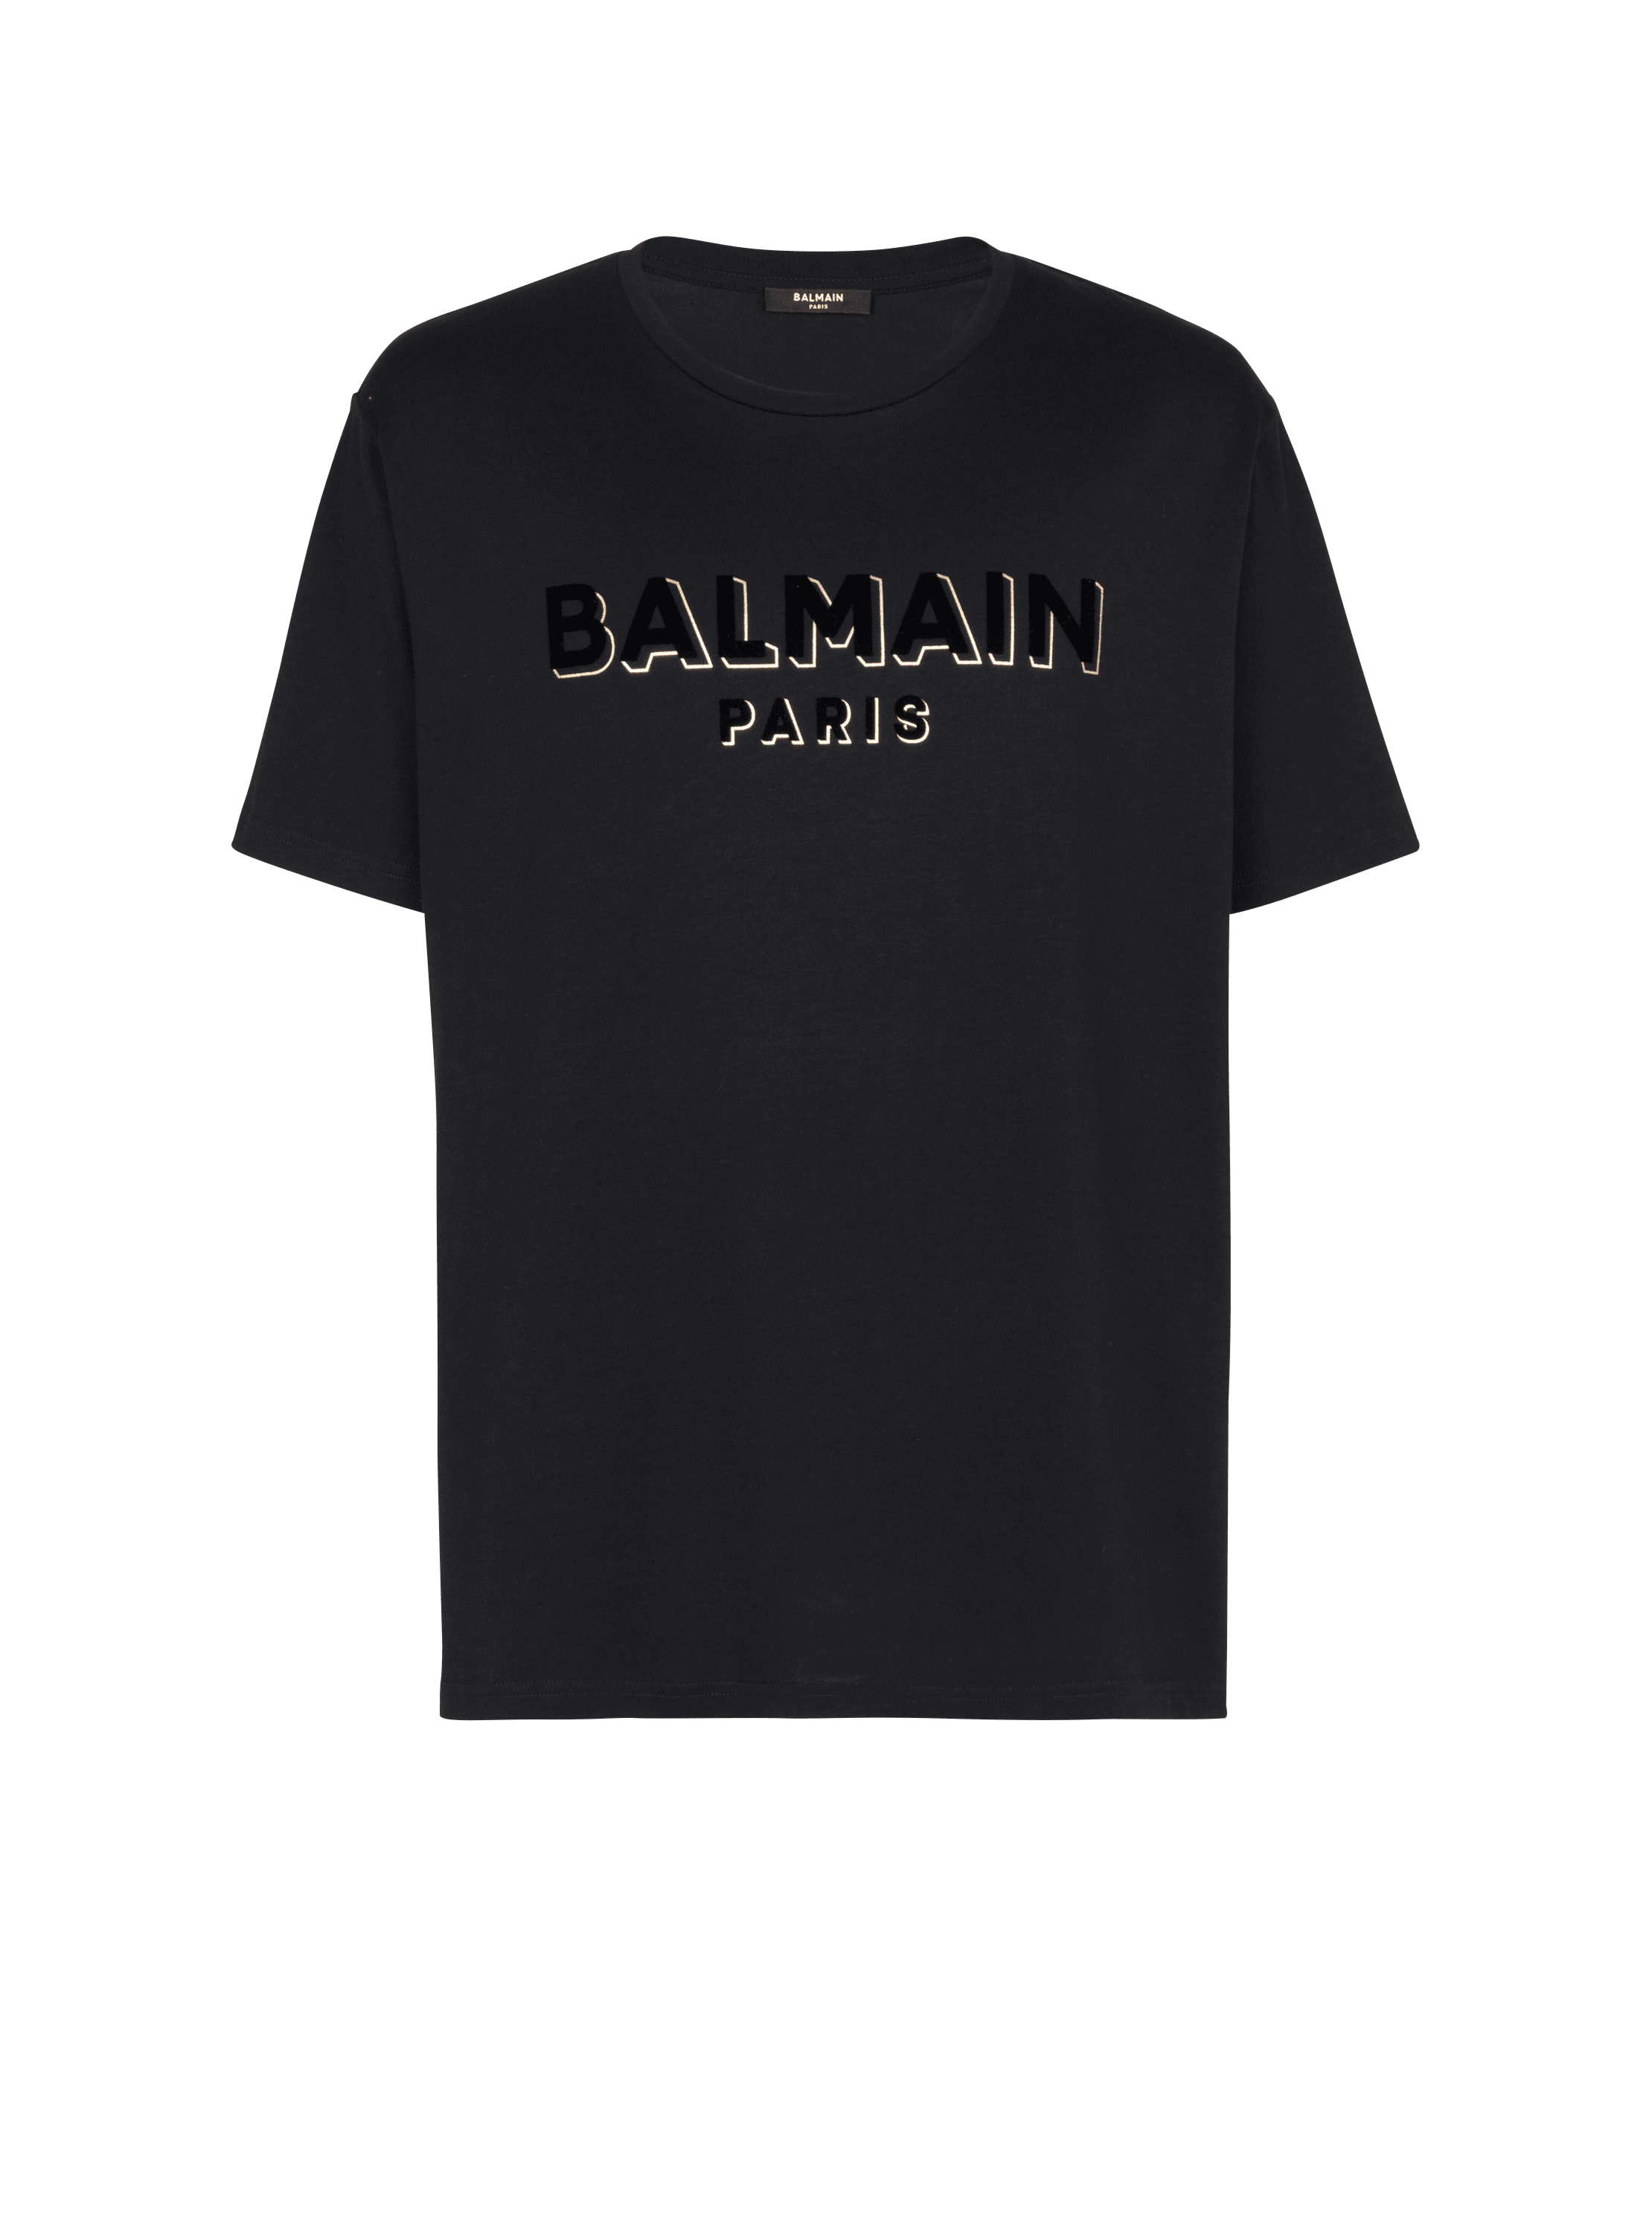 Camiseta con logotipo de Balmain metalizado serigrafiado, negro, hi-res